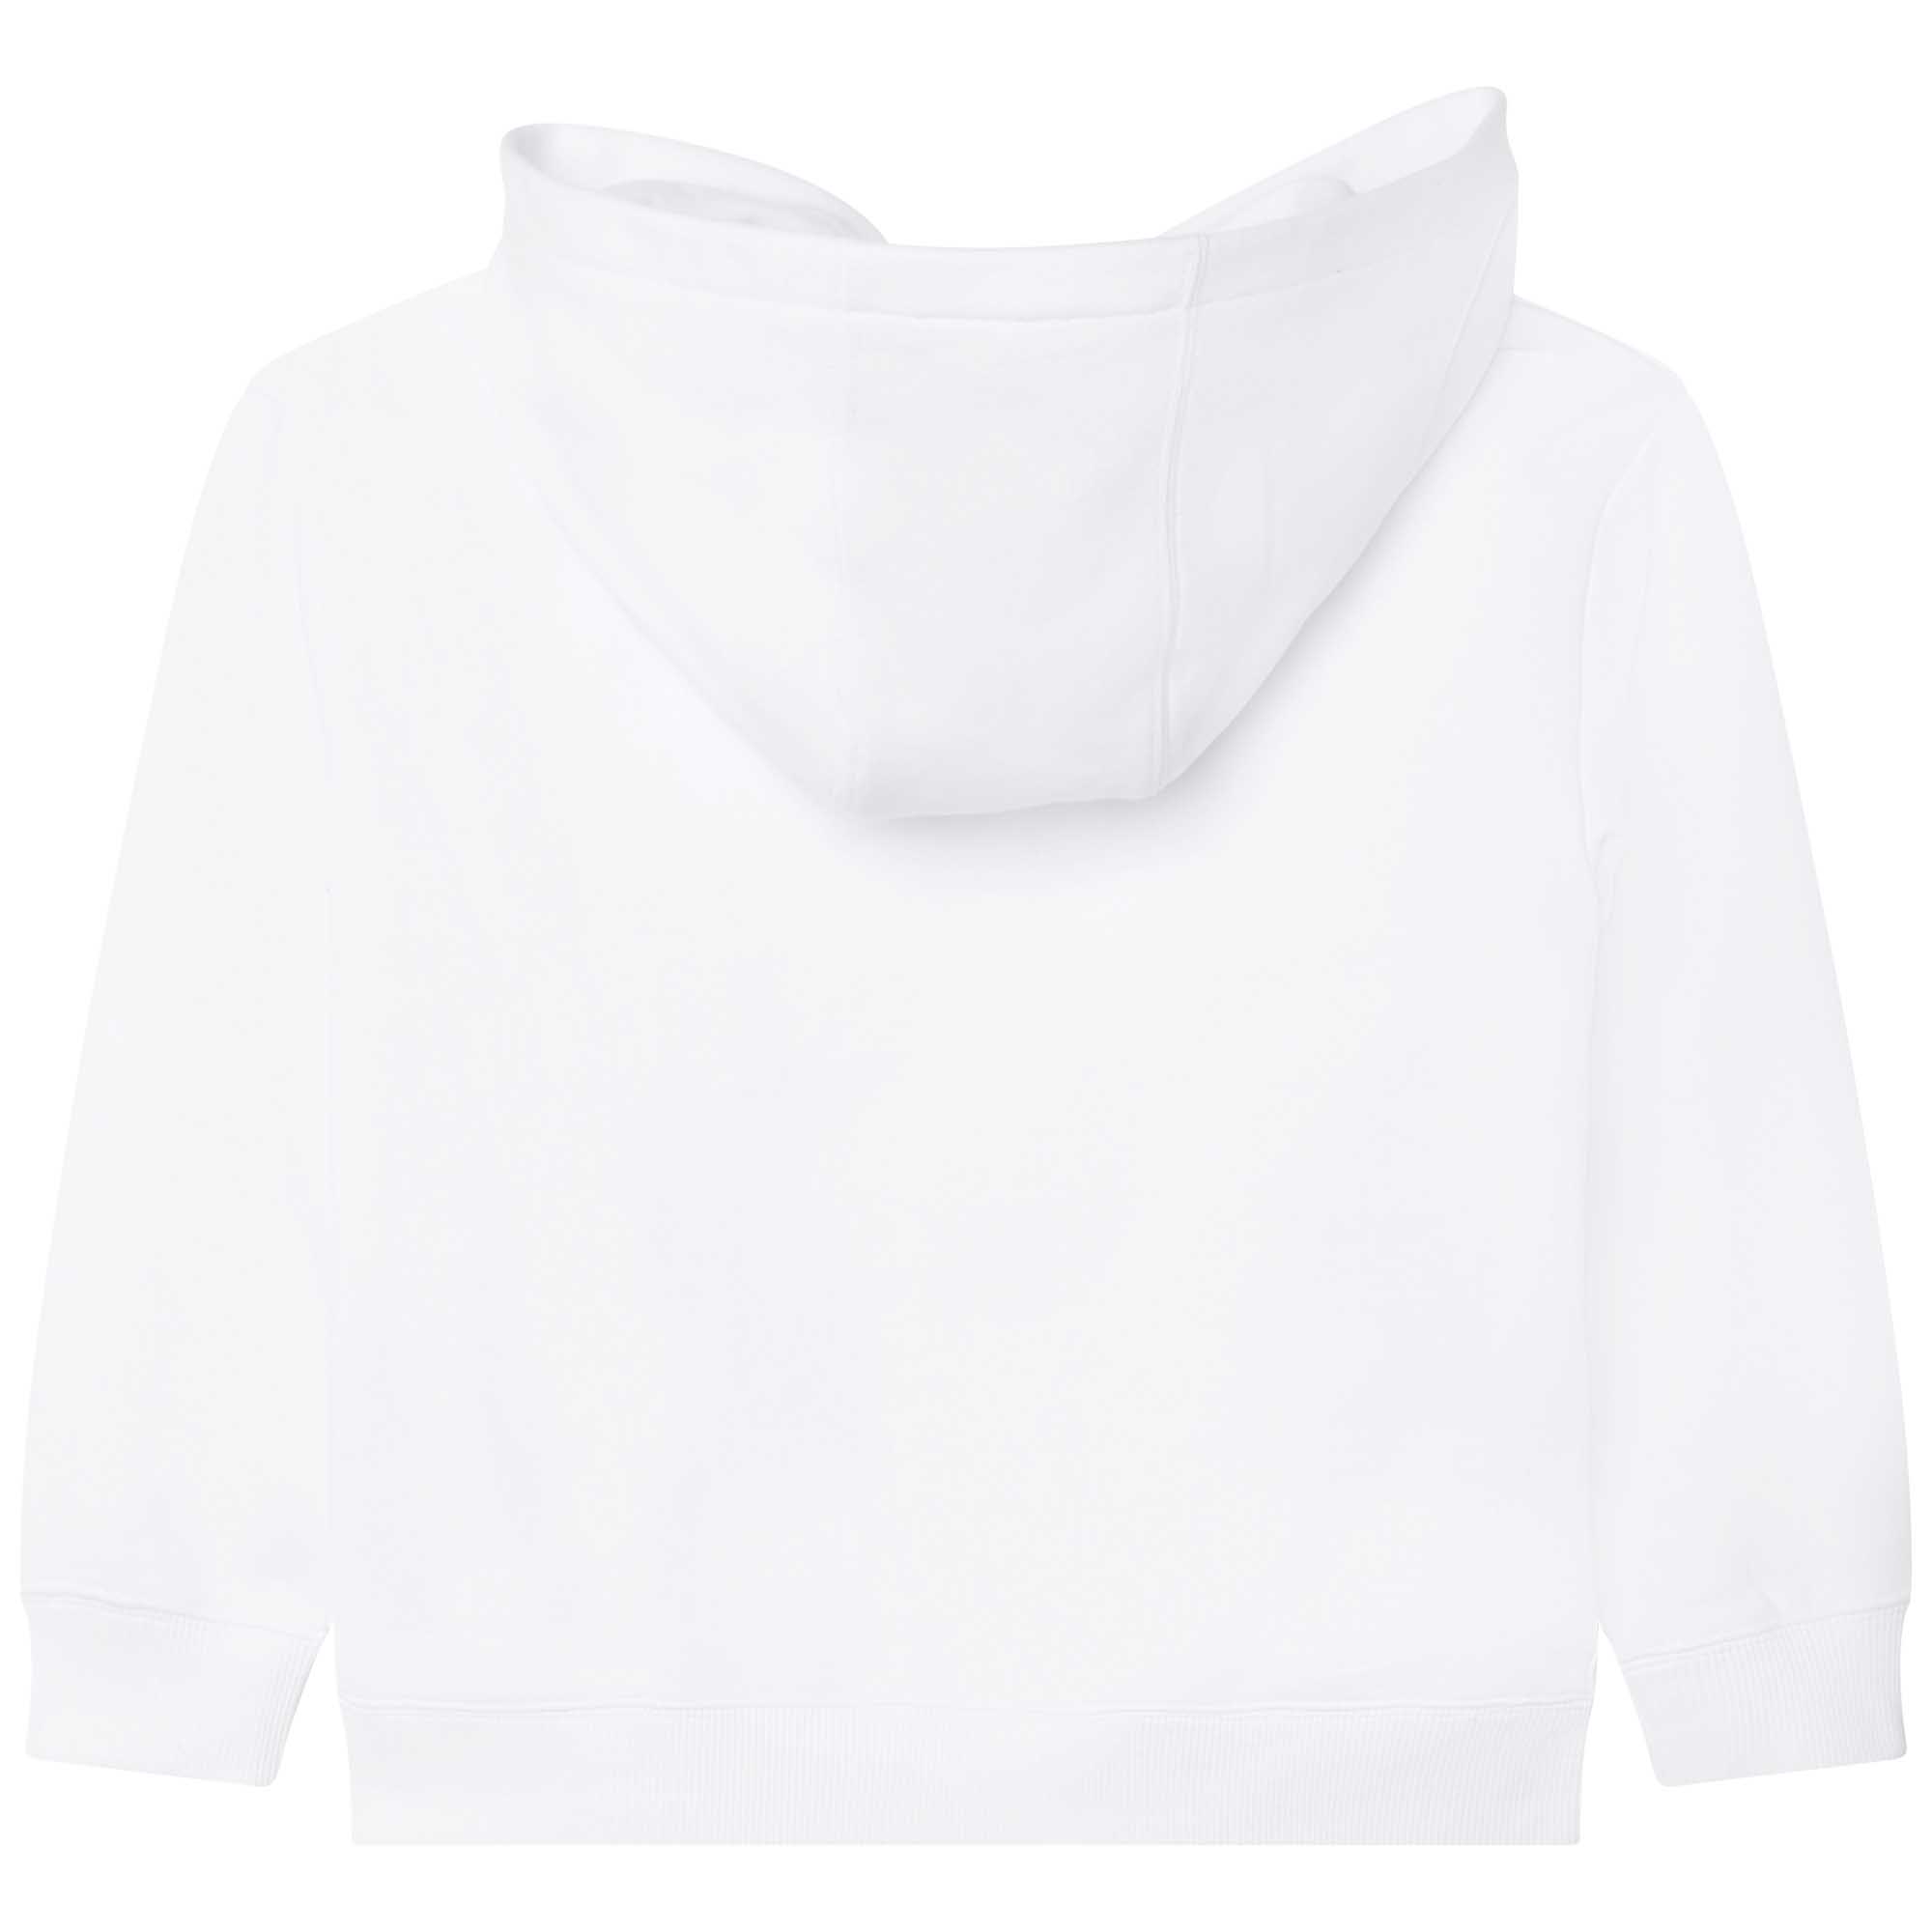 Zip-up hooded sweatshirt MARC JACOBS for UNISEX